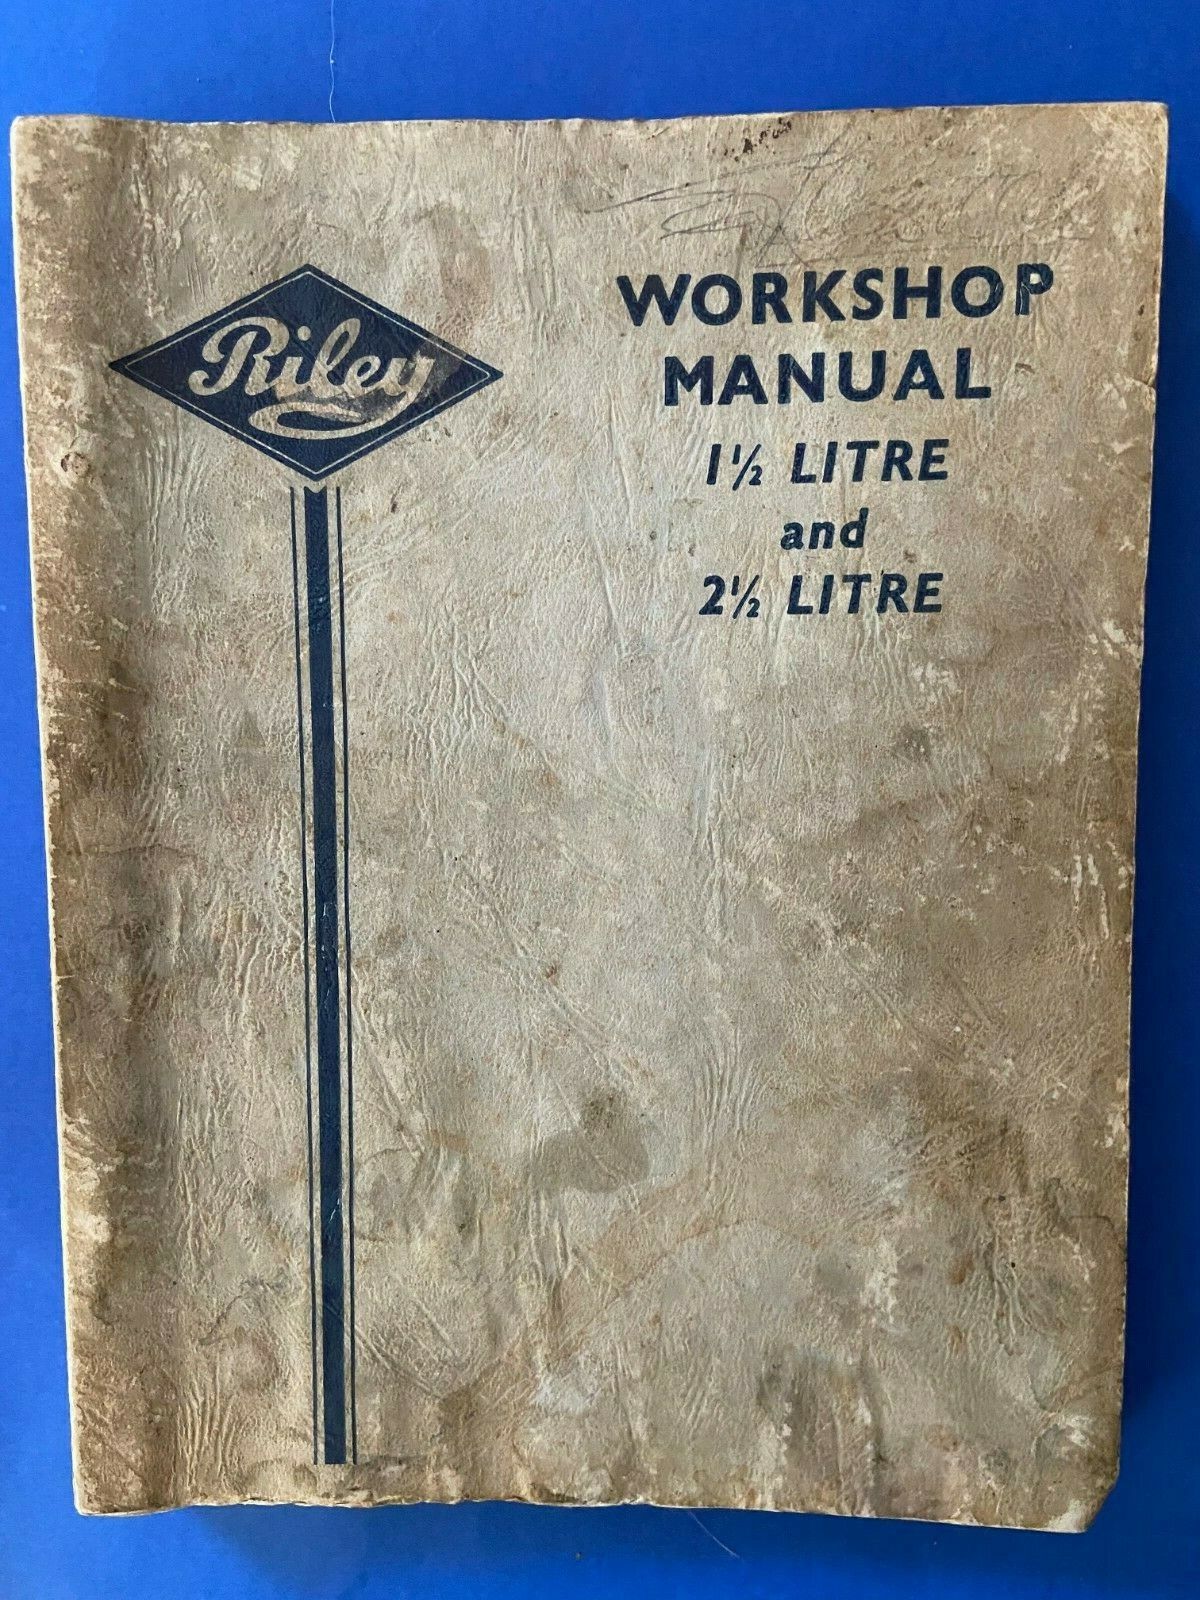 1940s vintage Riley Workshop Manual 1 1/2 Litre and 2 1/2 Litre 1949 Issue 4